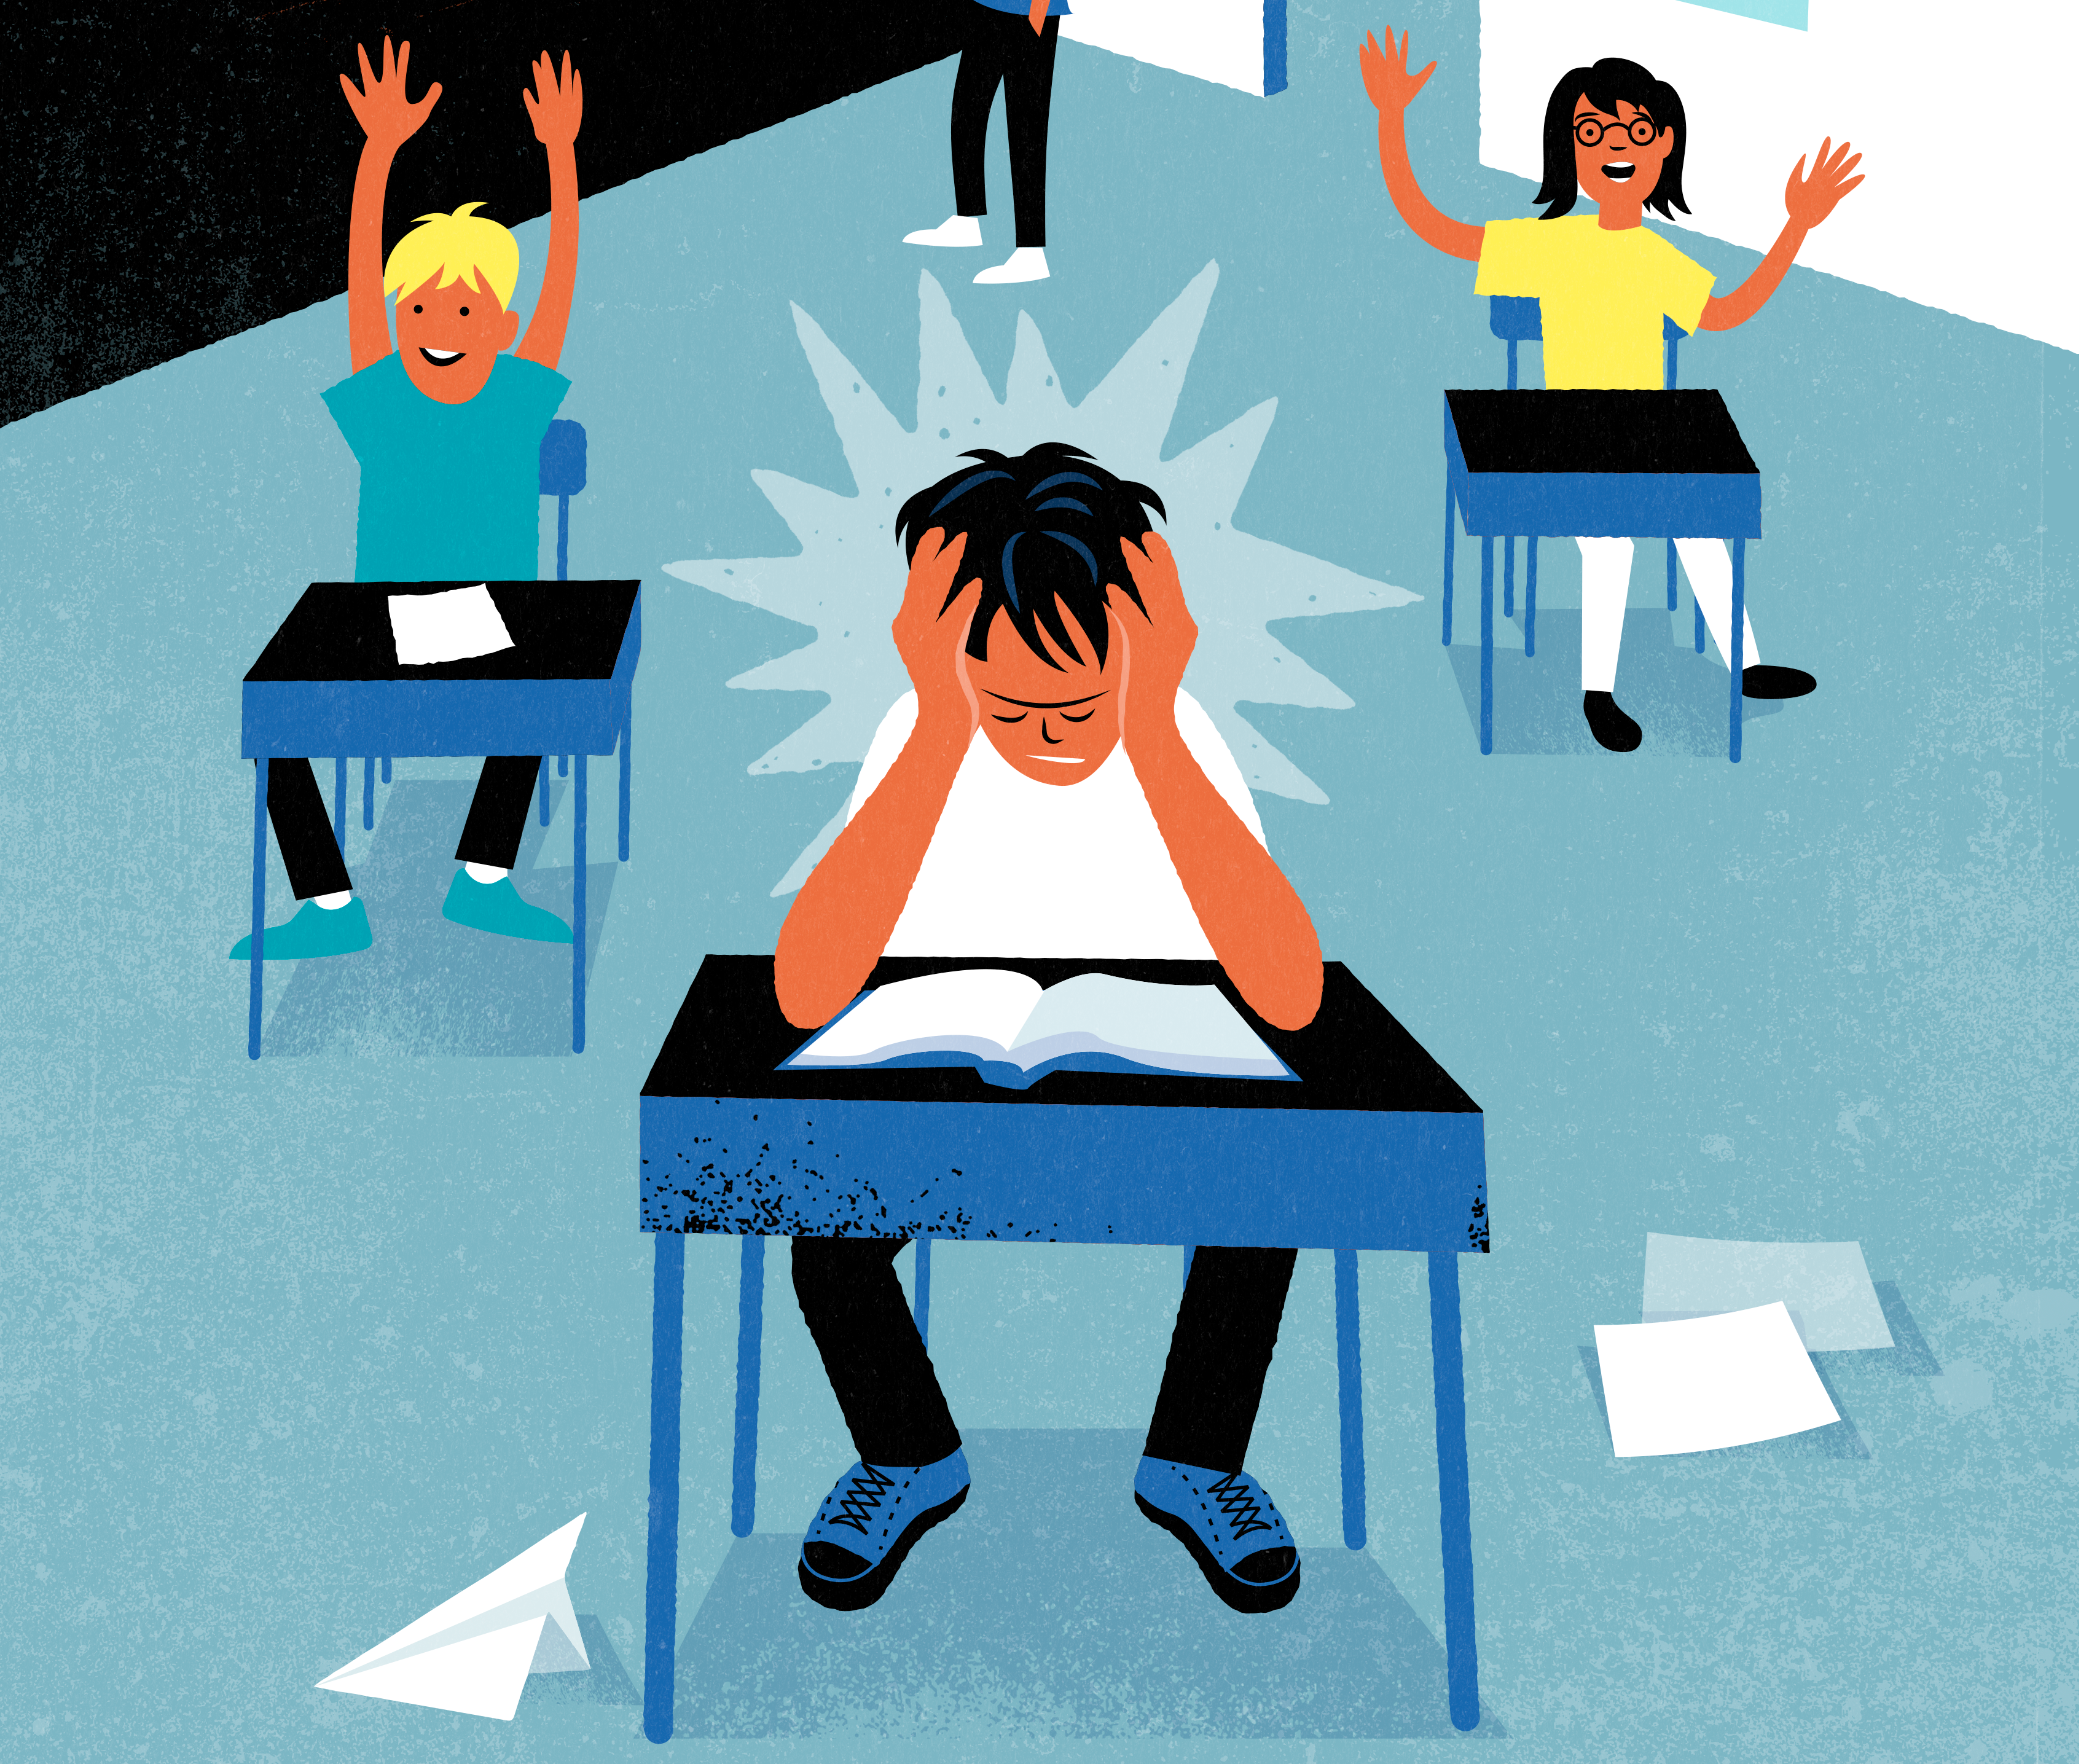 Stressad elev i klassrum